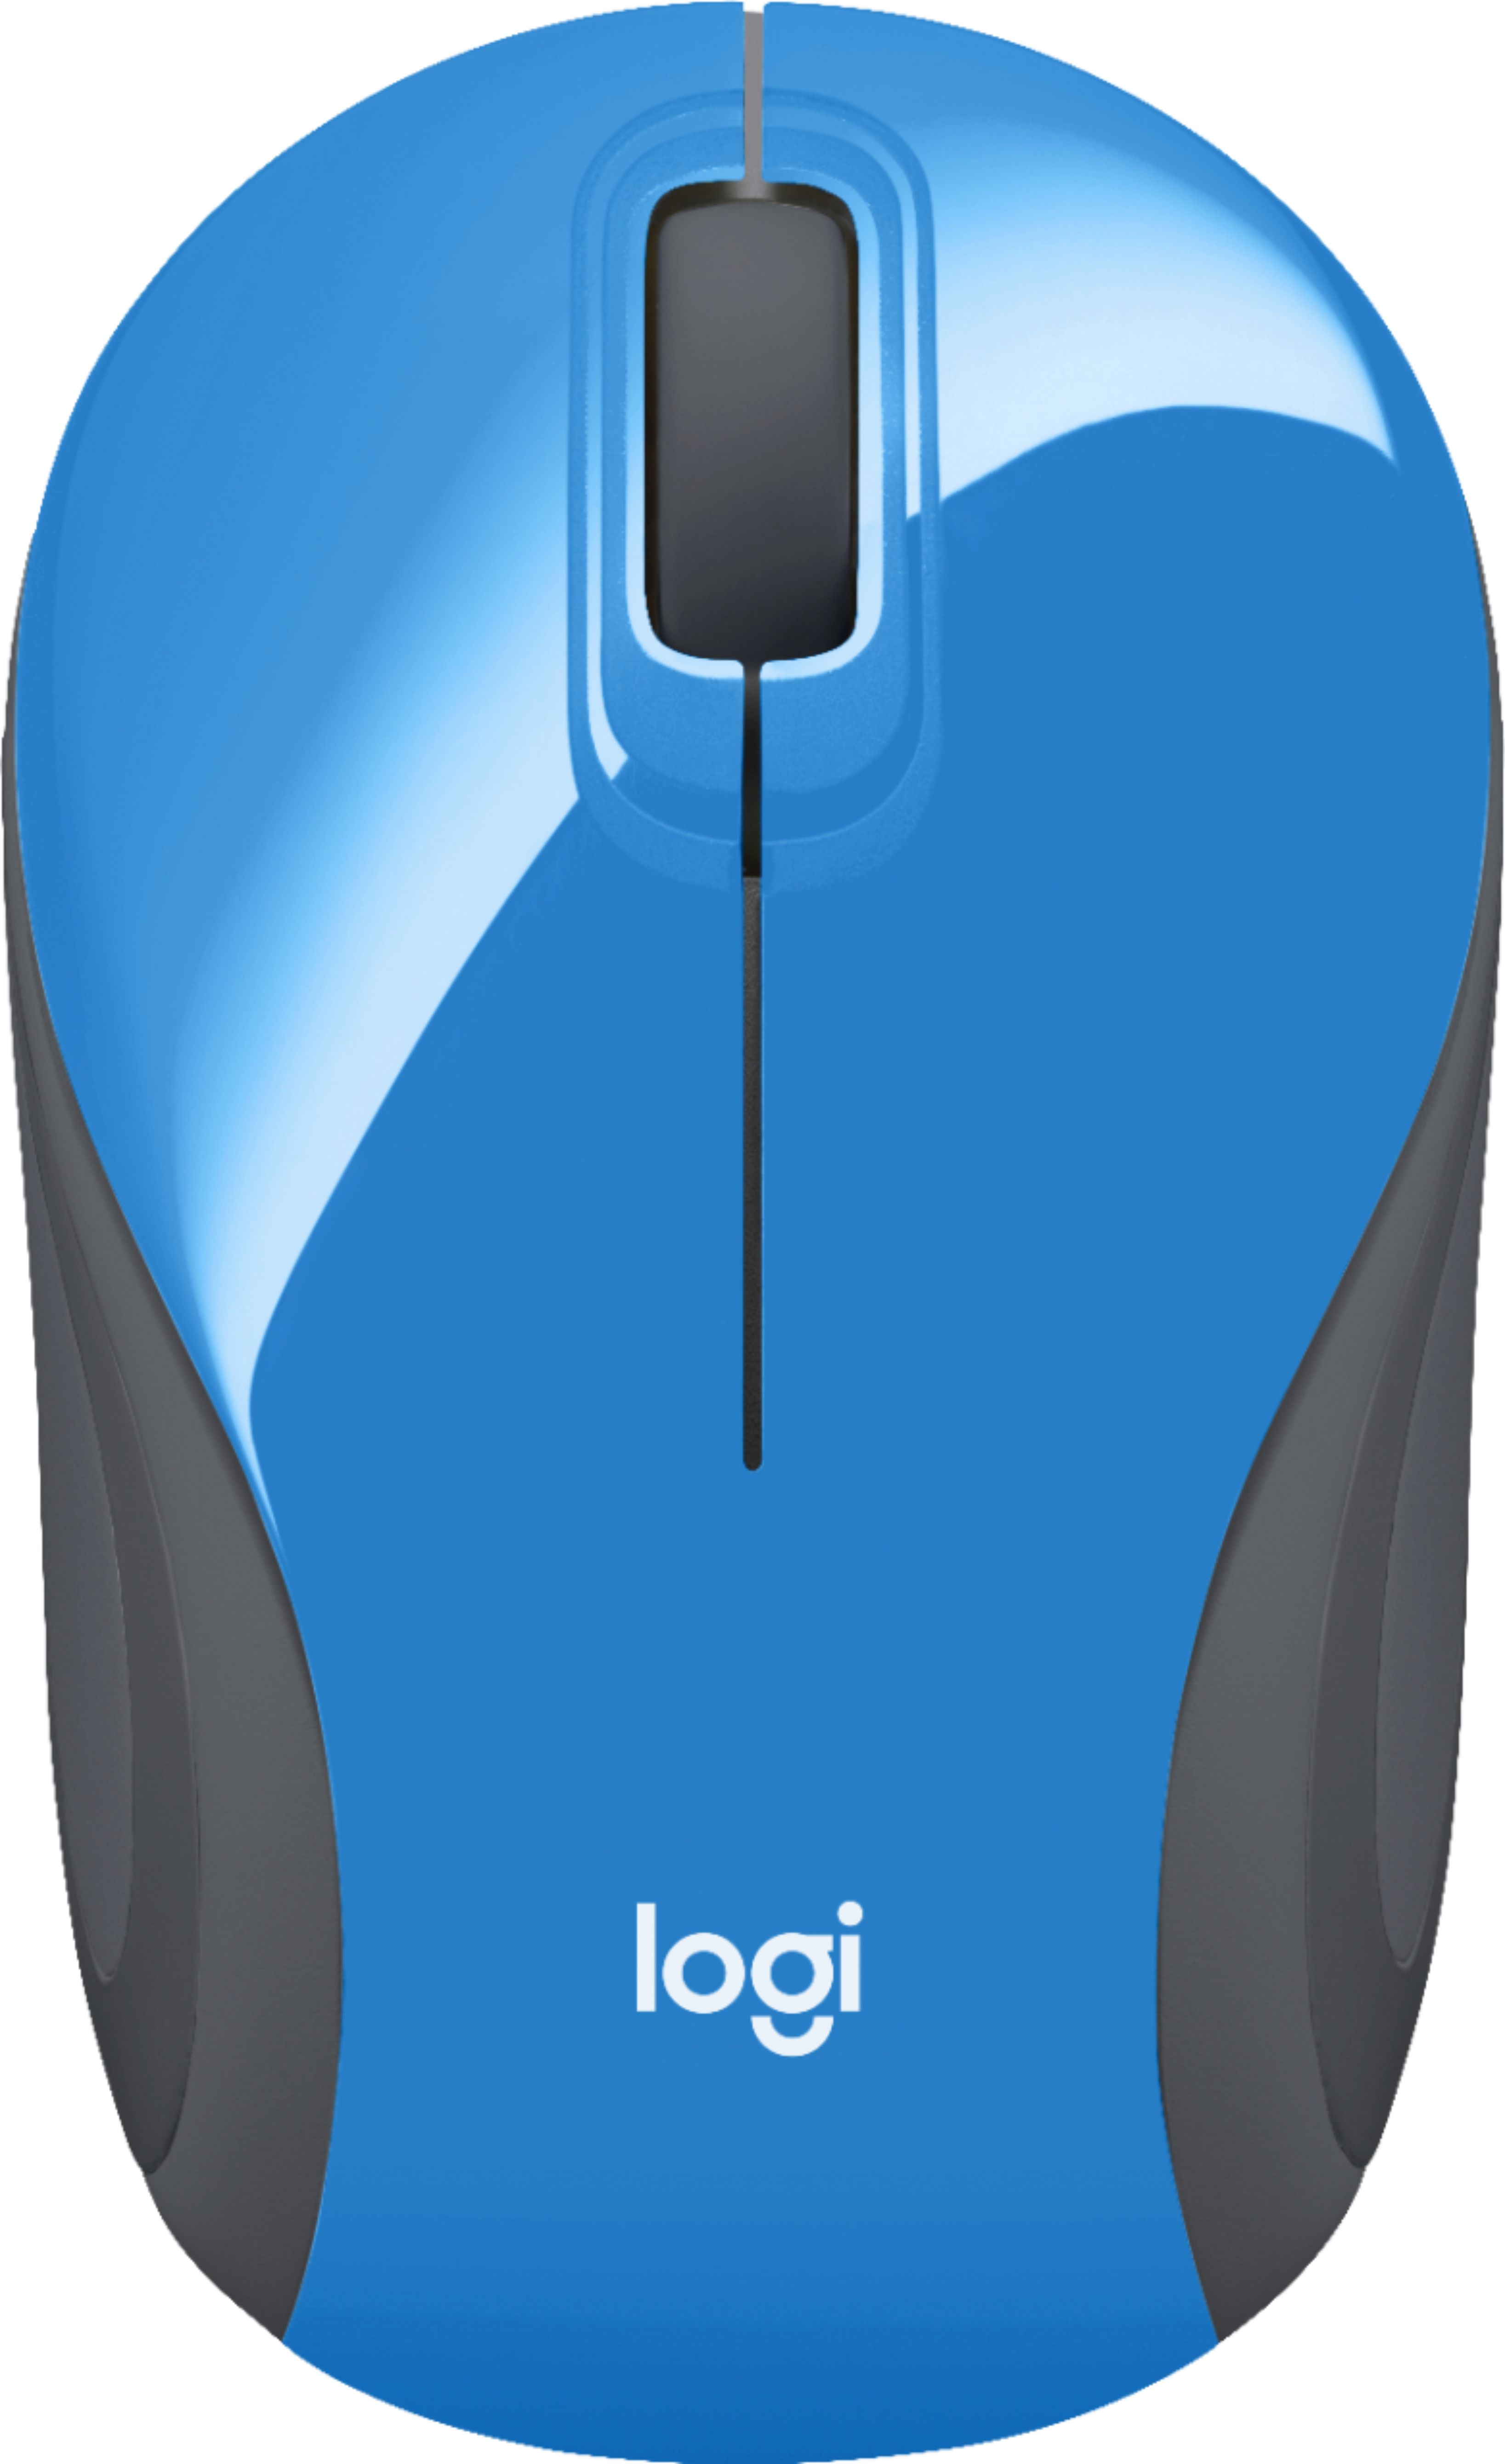 Logitech M187 Mini Wireless Optical - Ambidextrous Blue-gray Mouse Best 910-002728 Buy